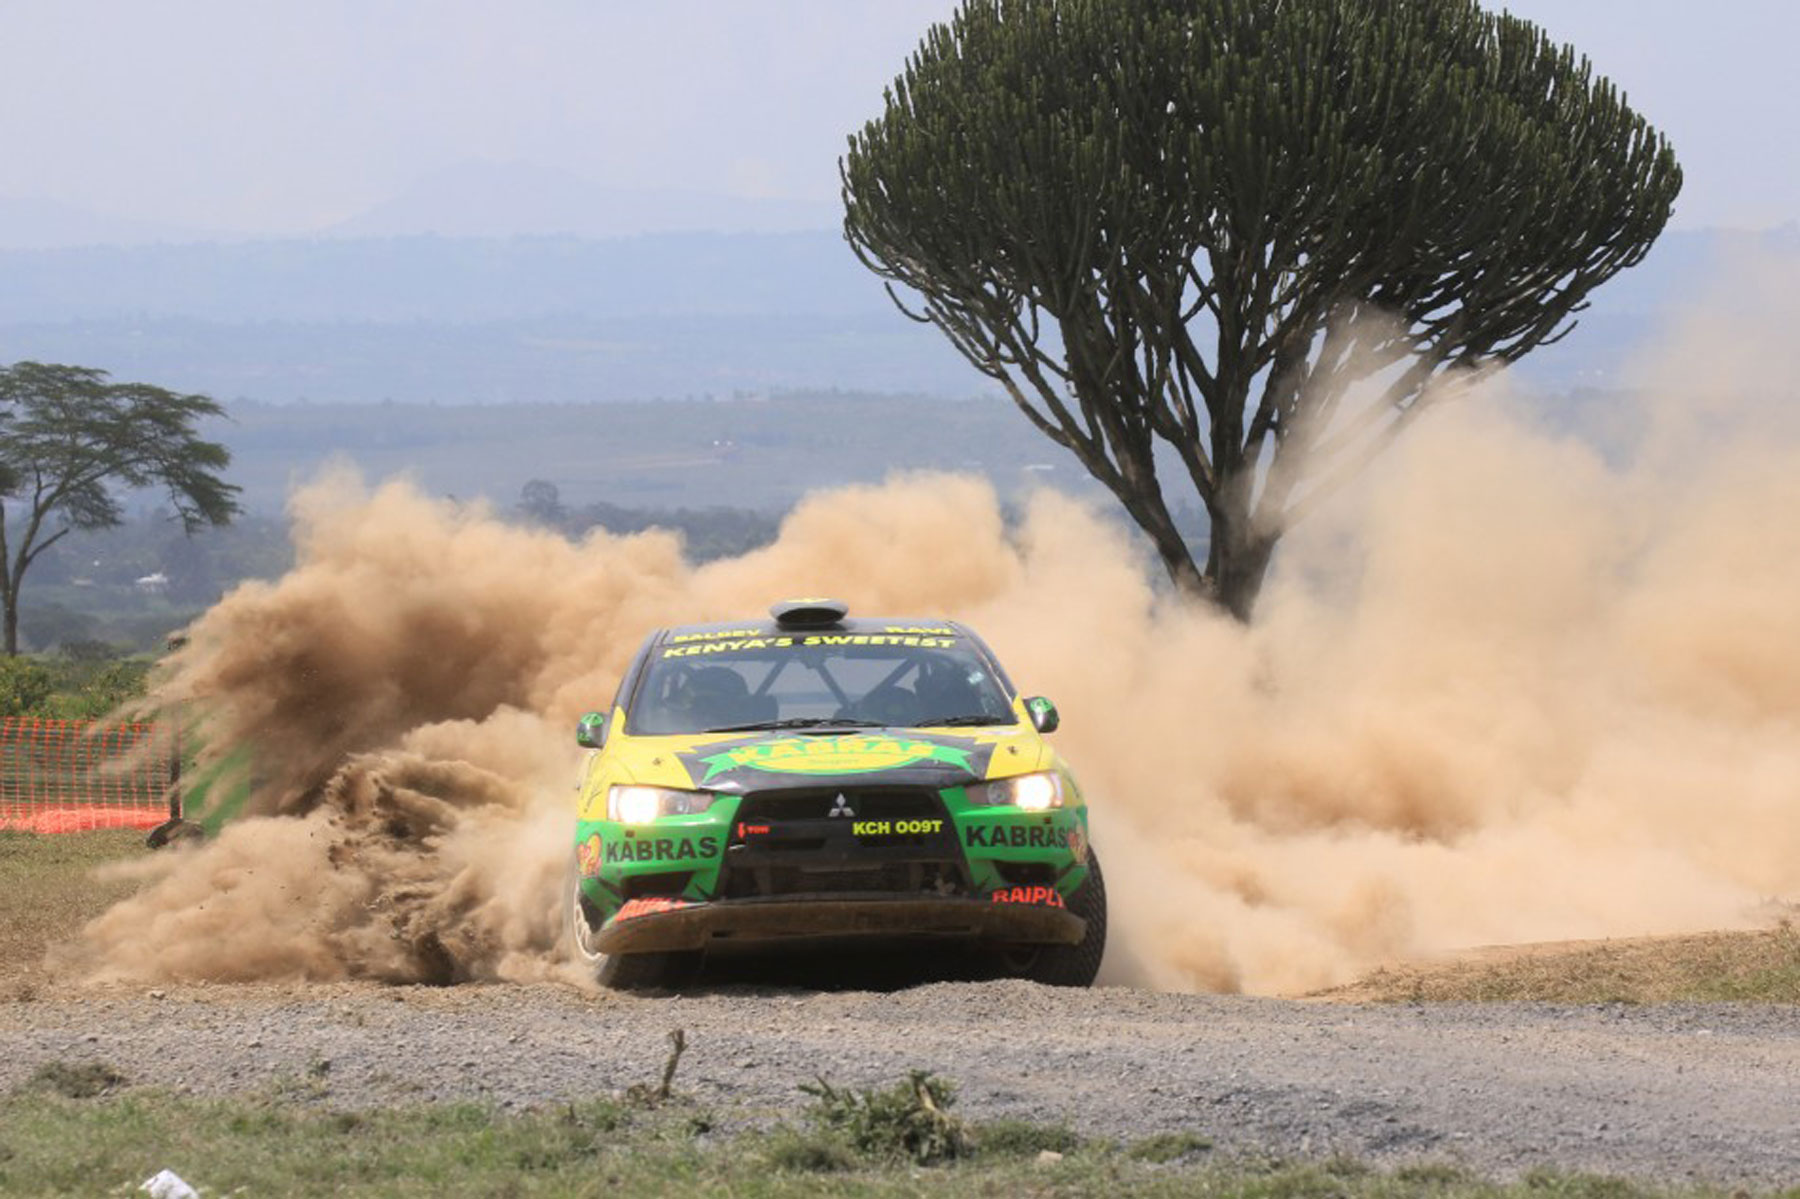 Safari Rally return to WRC pushed to 2021